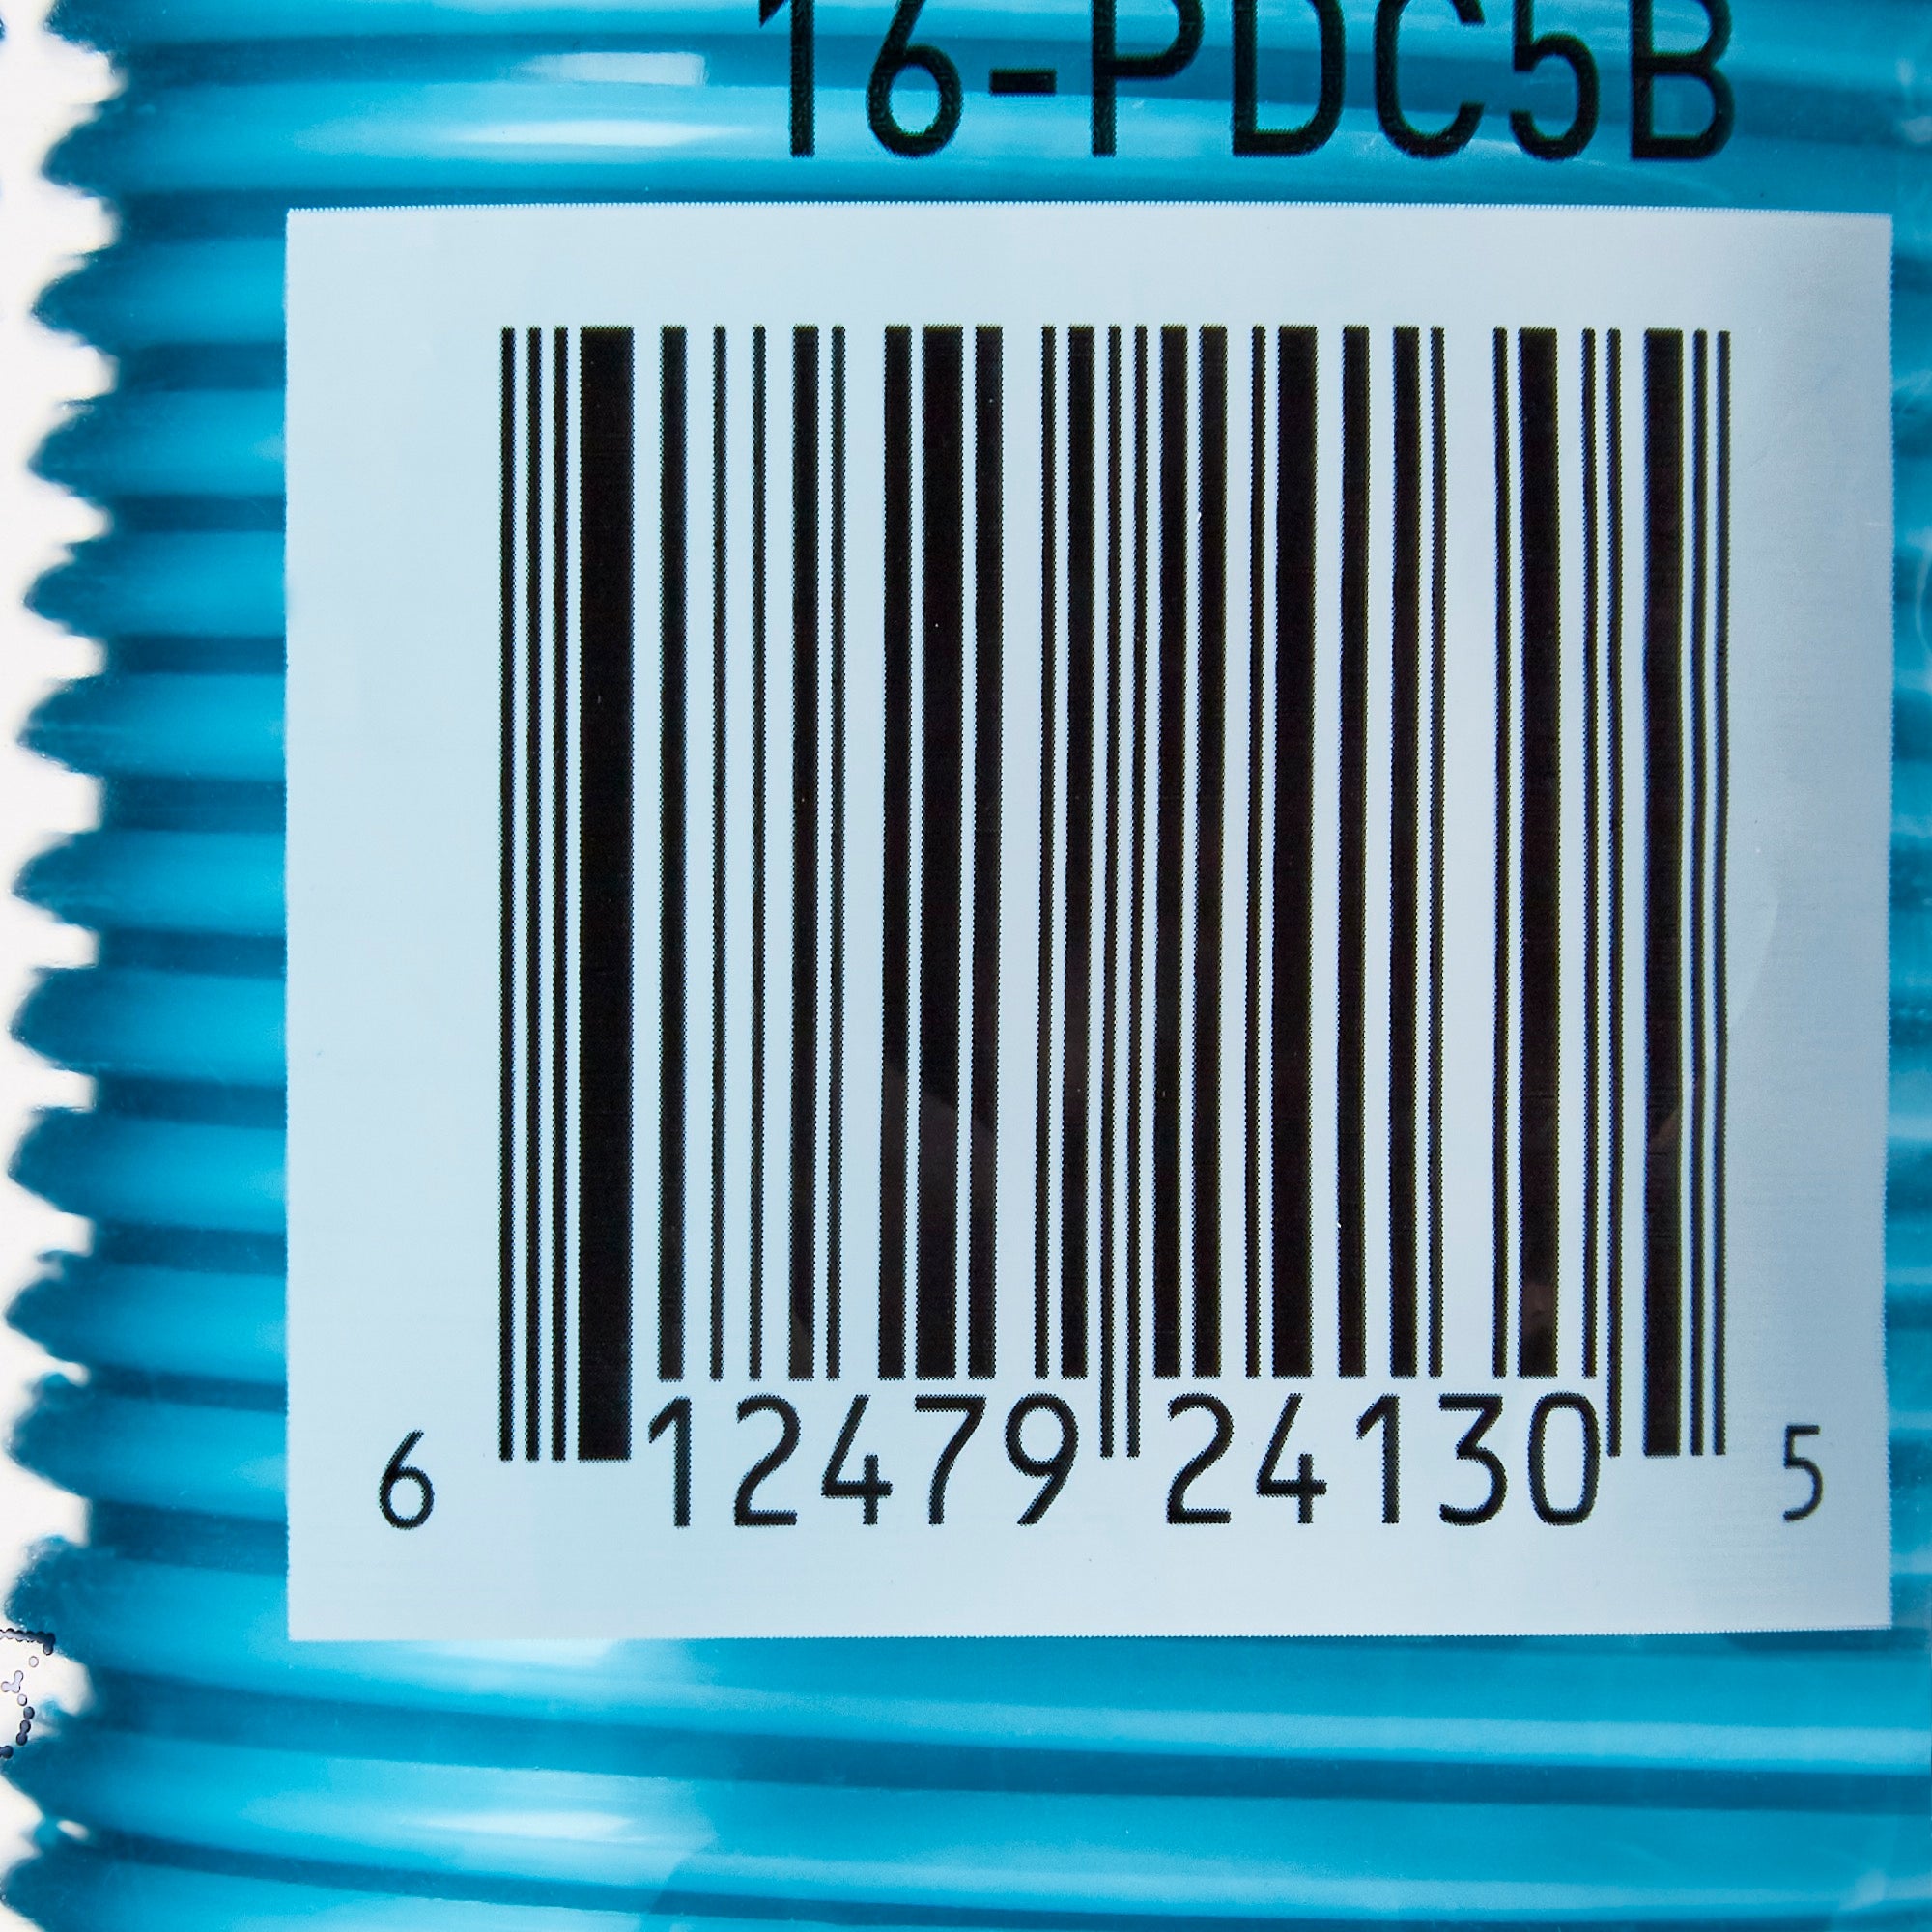 McKesson 5 oz Blue Disposable Polypropylene Drinking Cups - Bulk 2500 Pack